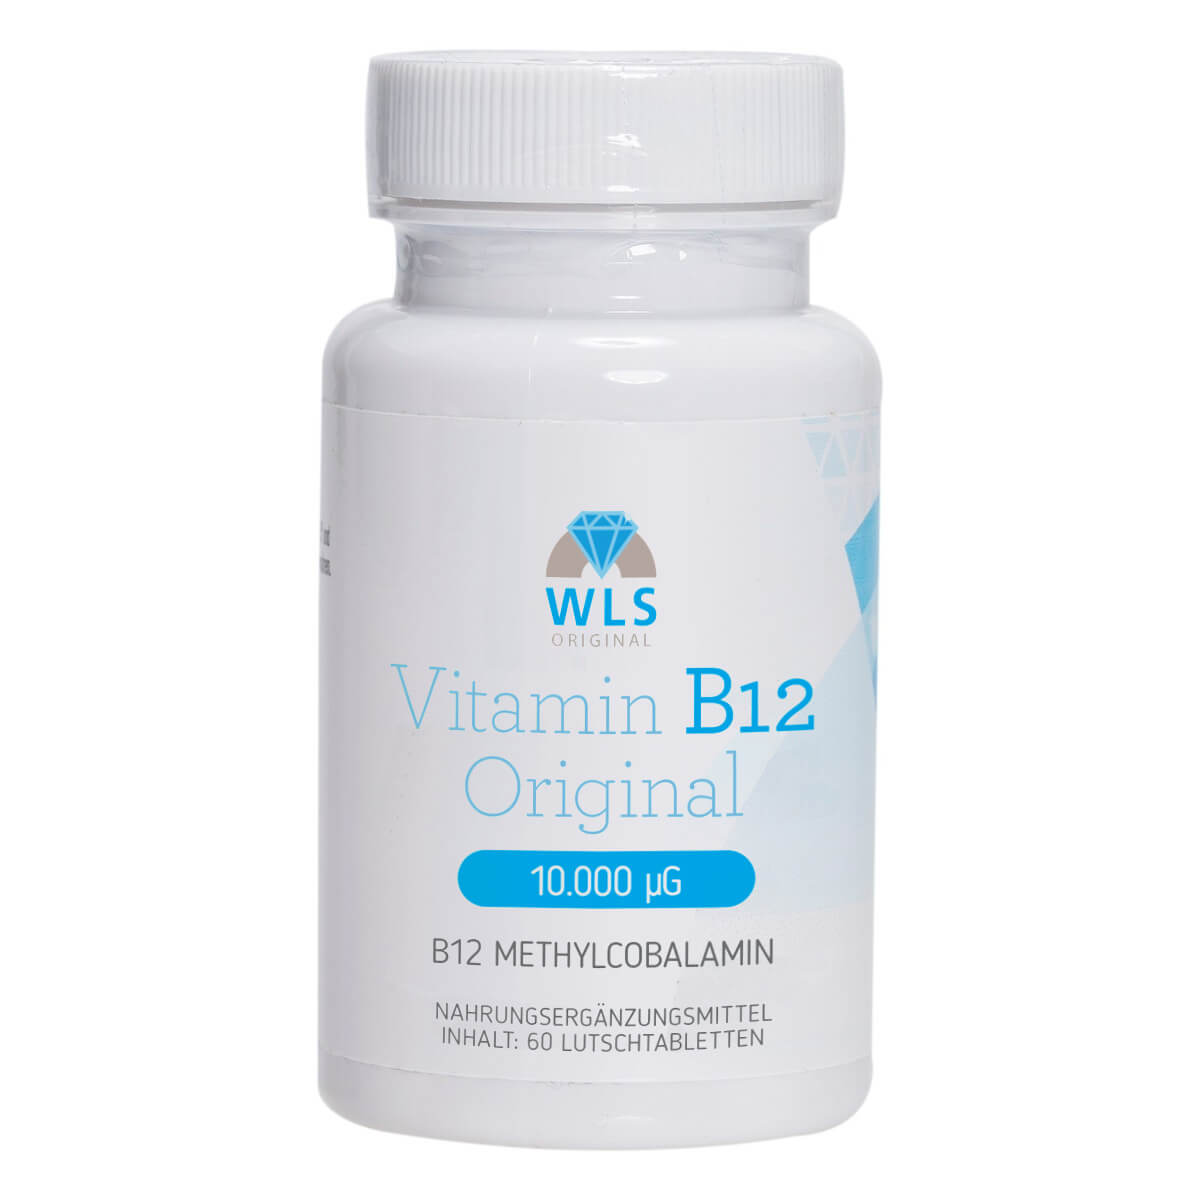 WLS Original Vitamine B12 10.000 mcg | WLS Products